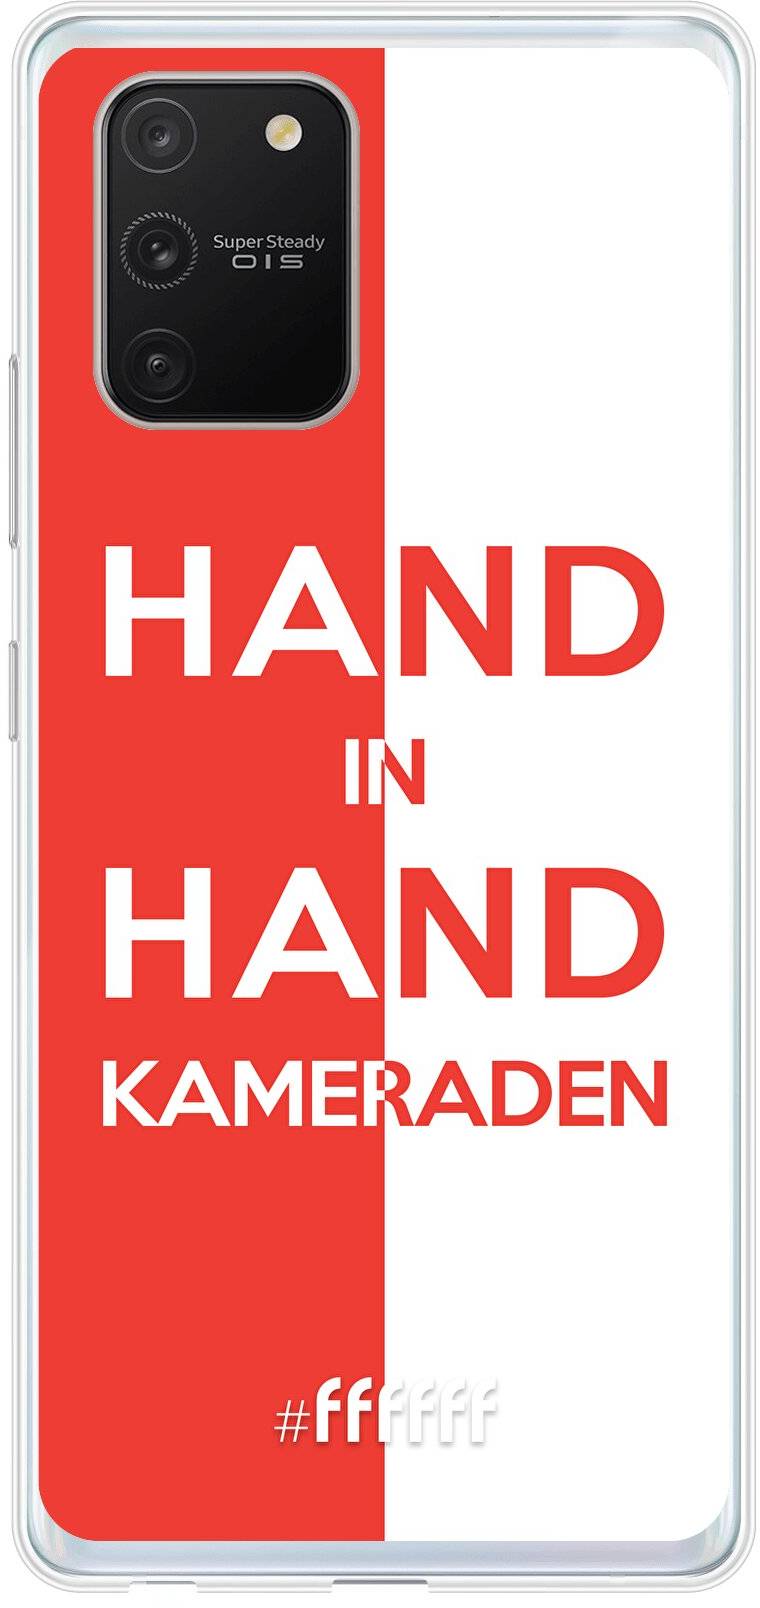 Feyenoord - Hand in hand, kameraden Galaxy S10 Lite